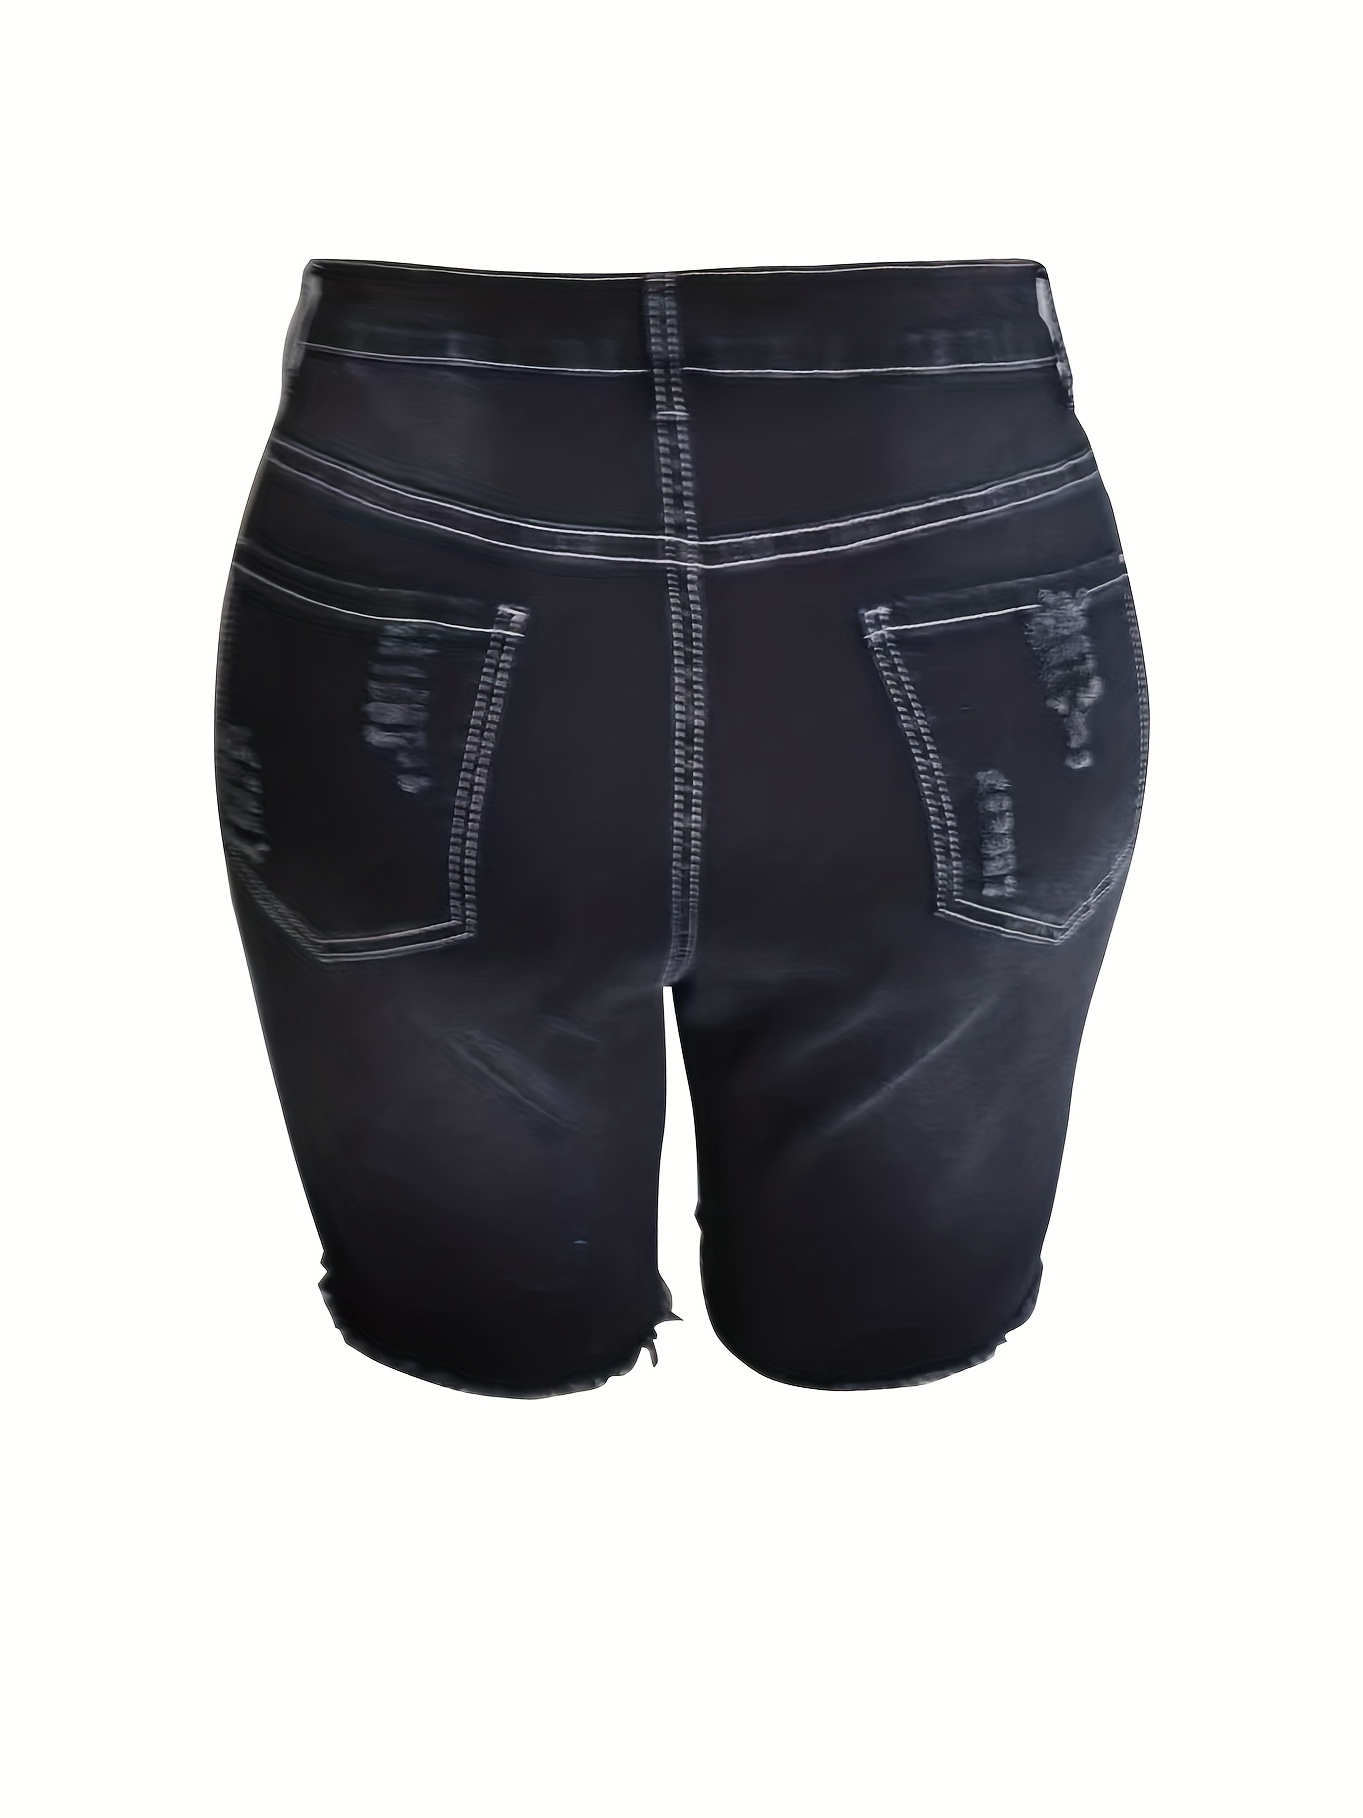 Denim Shorts, Jean Shorts, Black, Plus Size